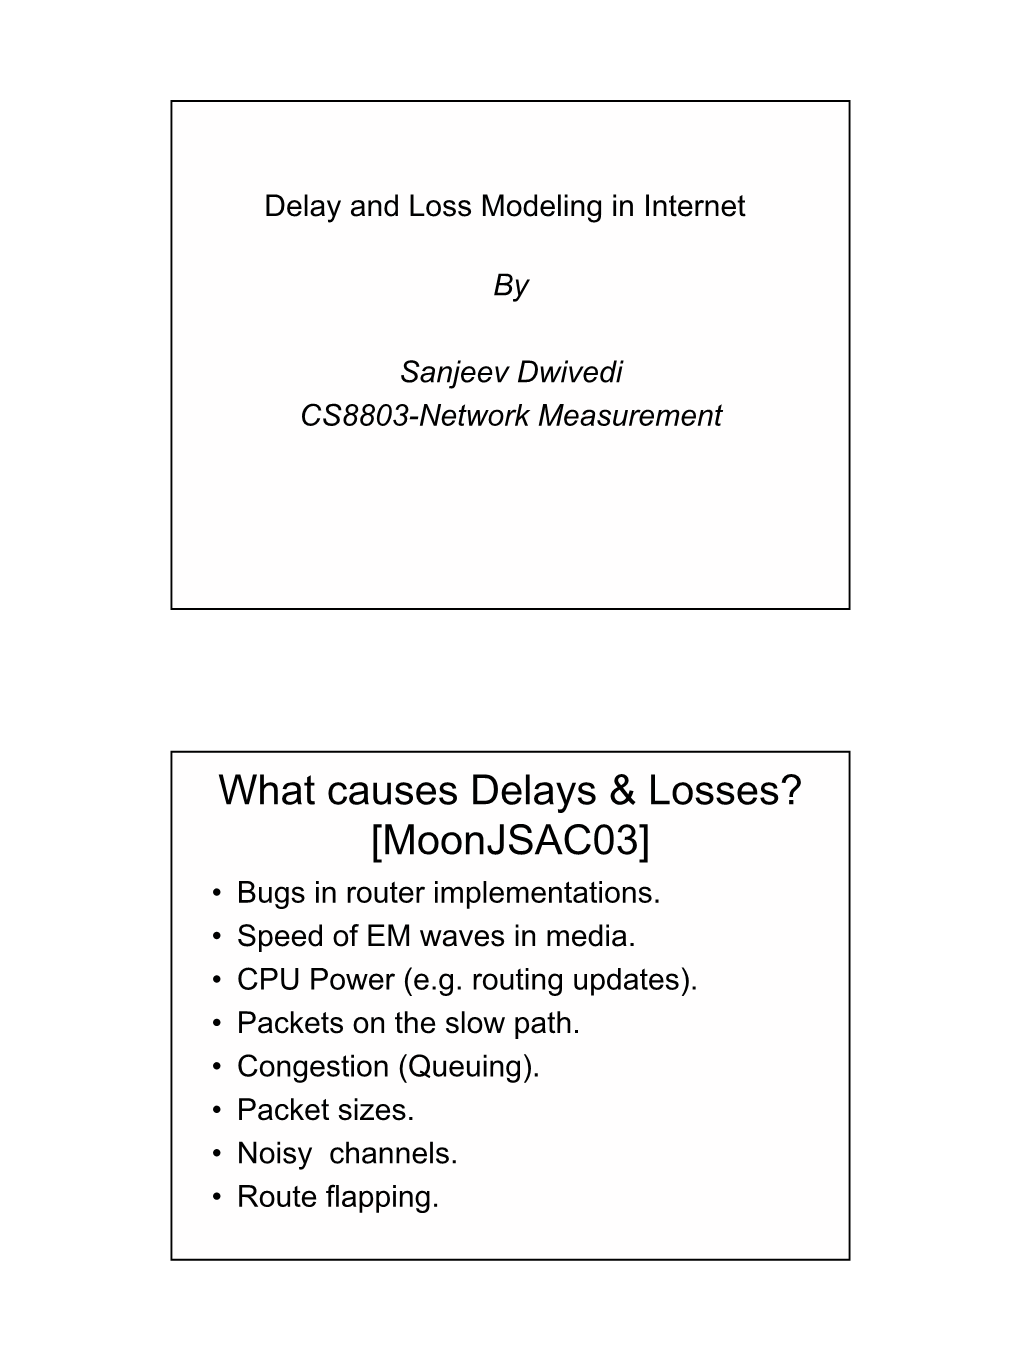 What Causes Delays & Losses? [Moonjsac03]